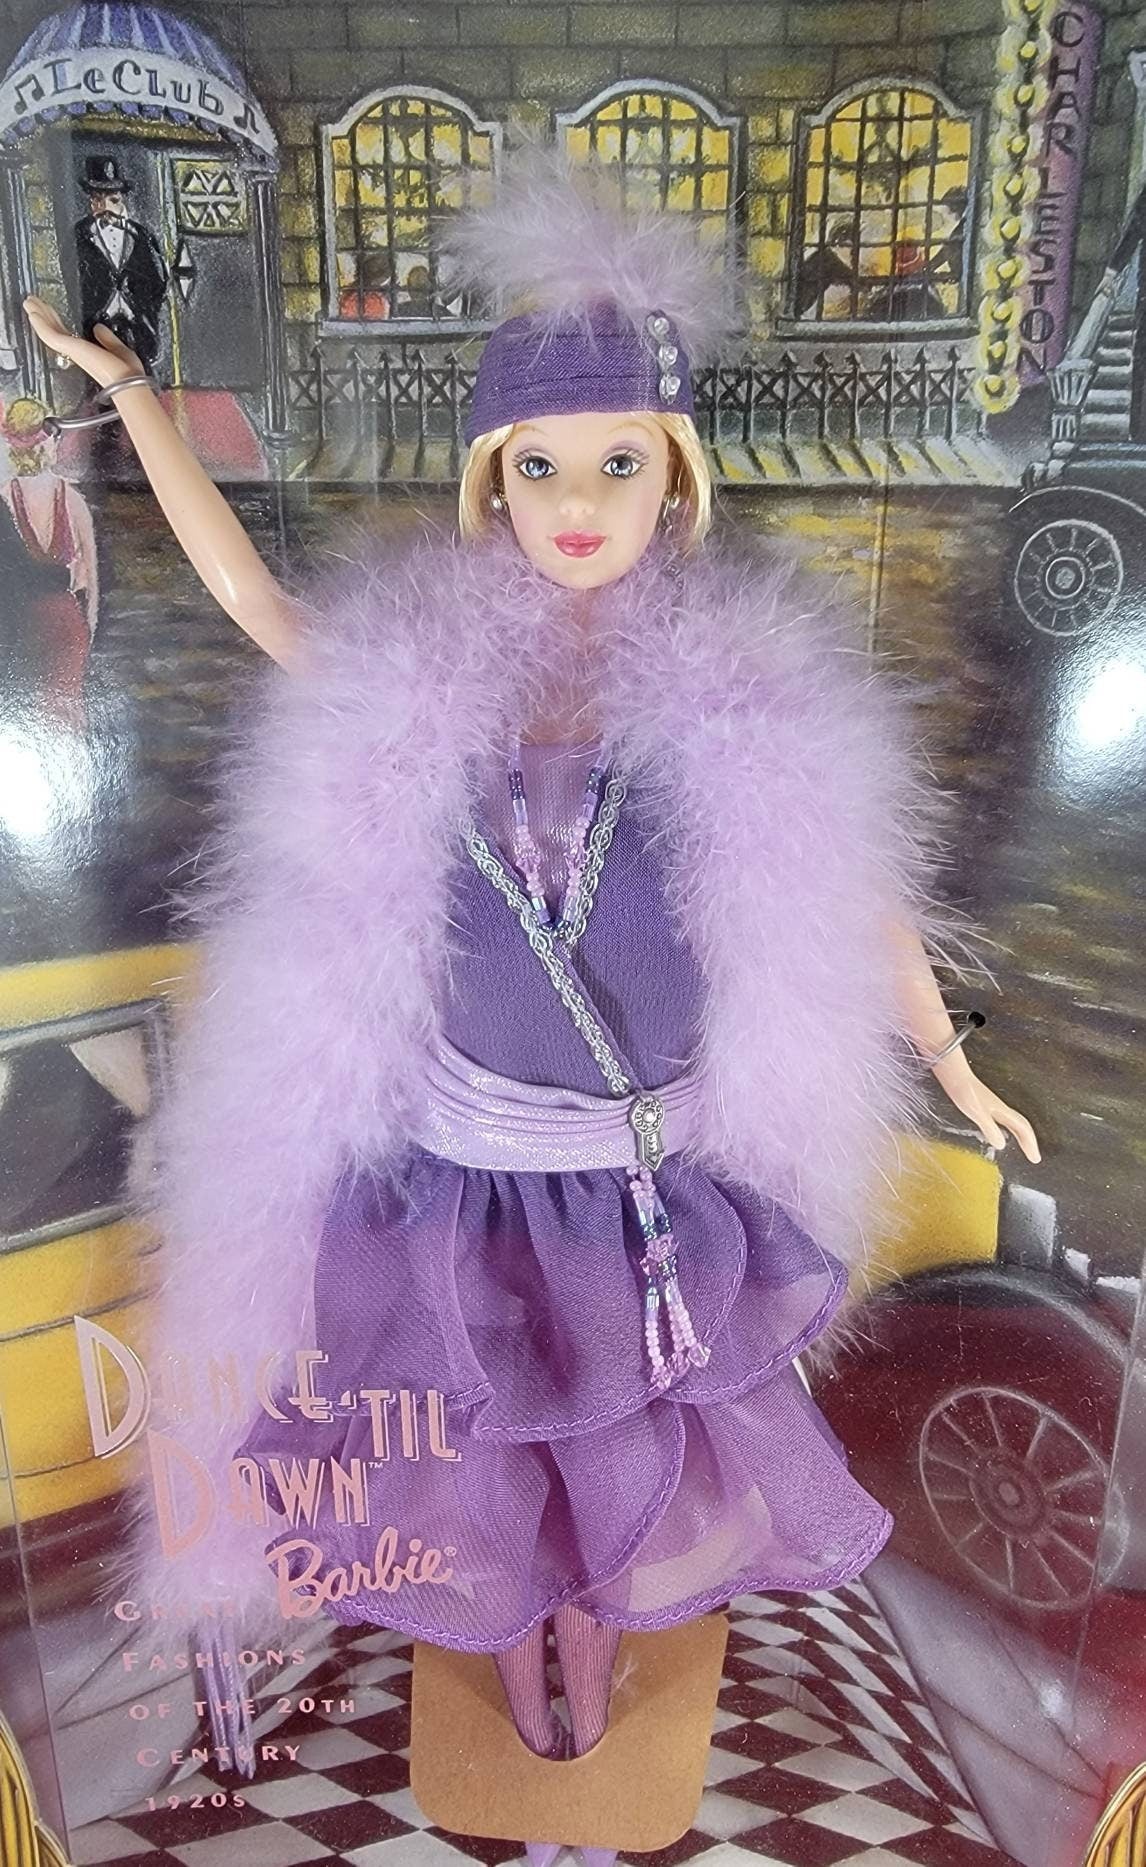 Dance 'till dawn barbie 1998 (nib)